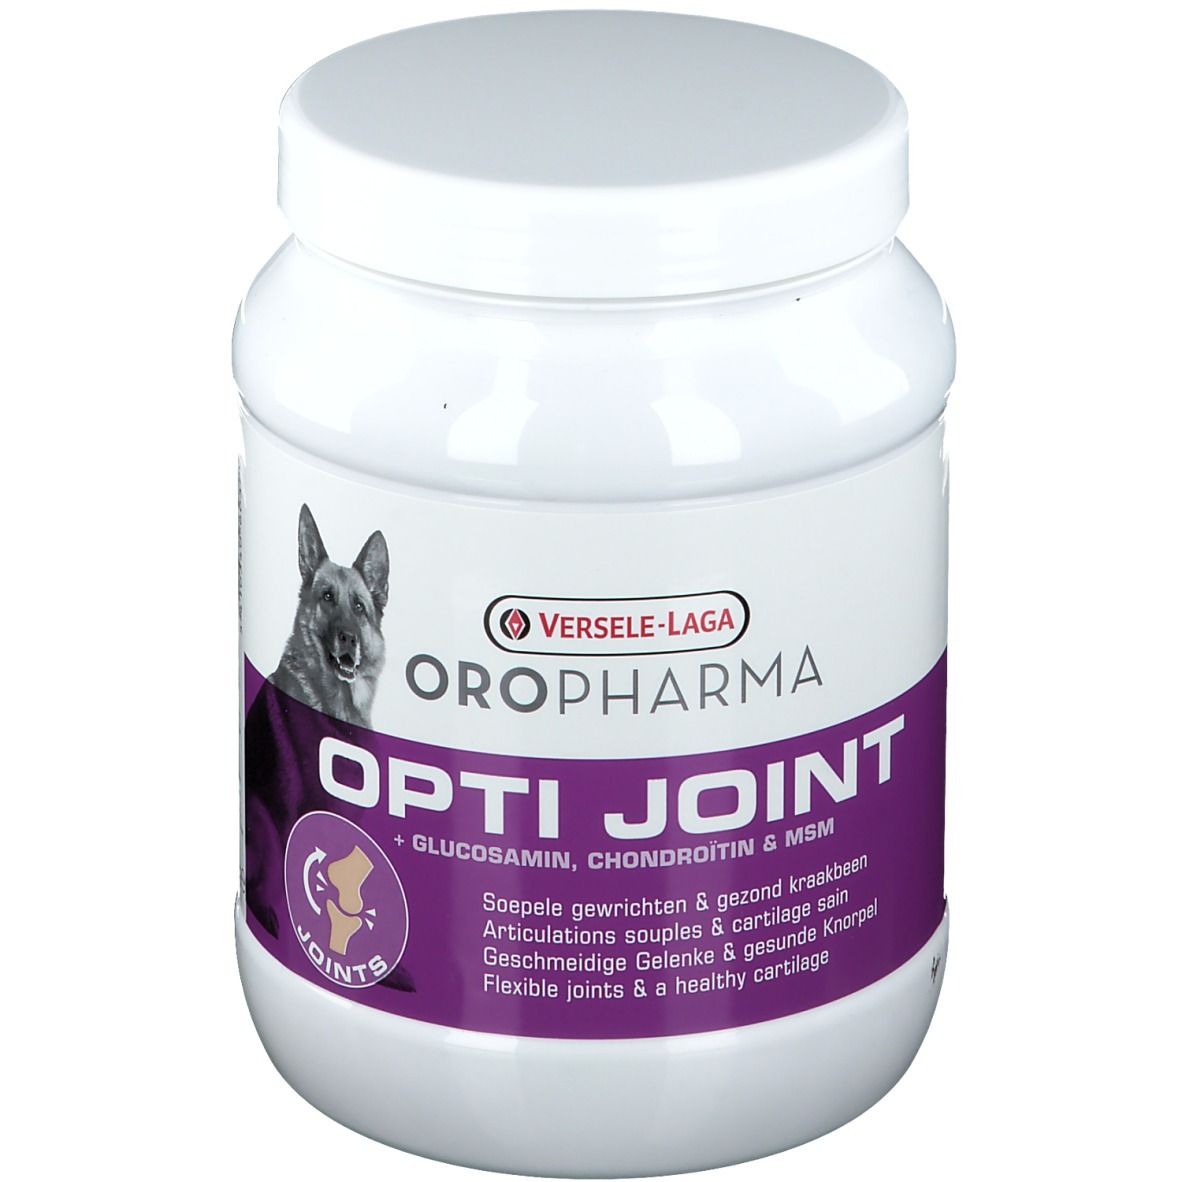 Oropharma Opti-Joint